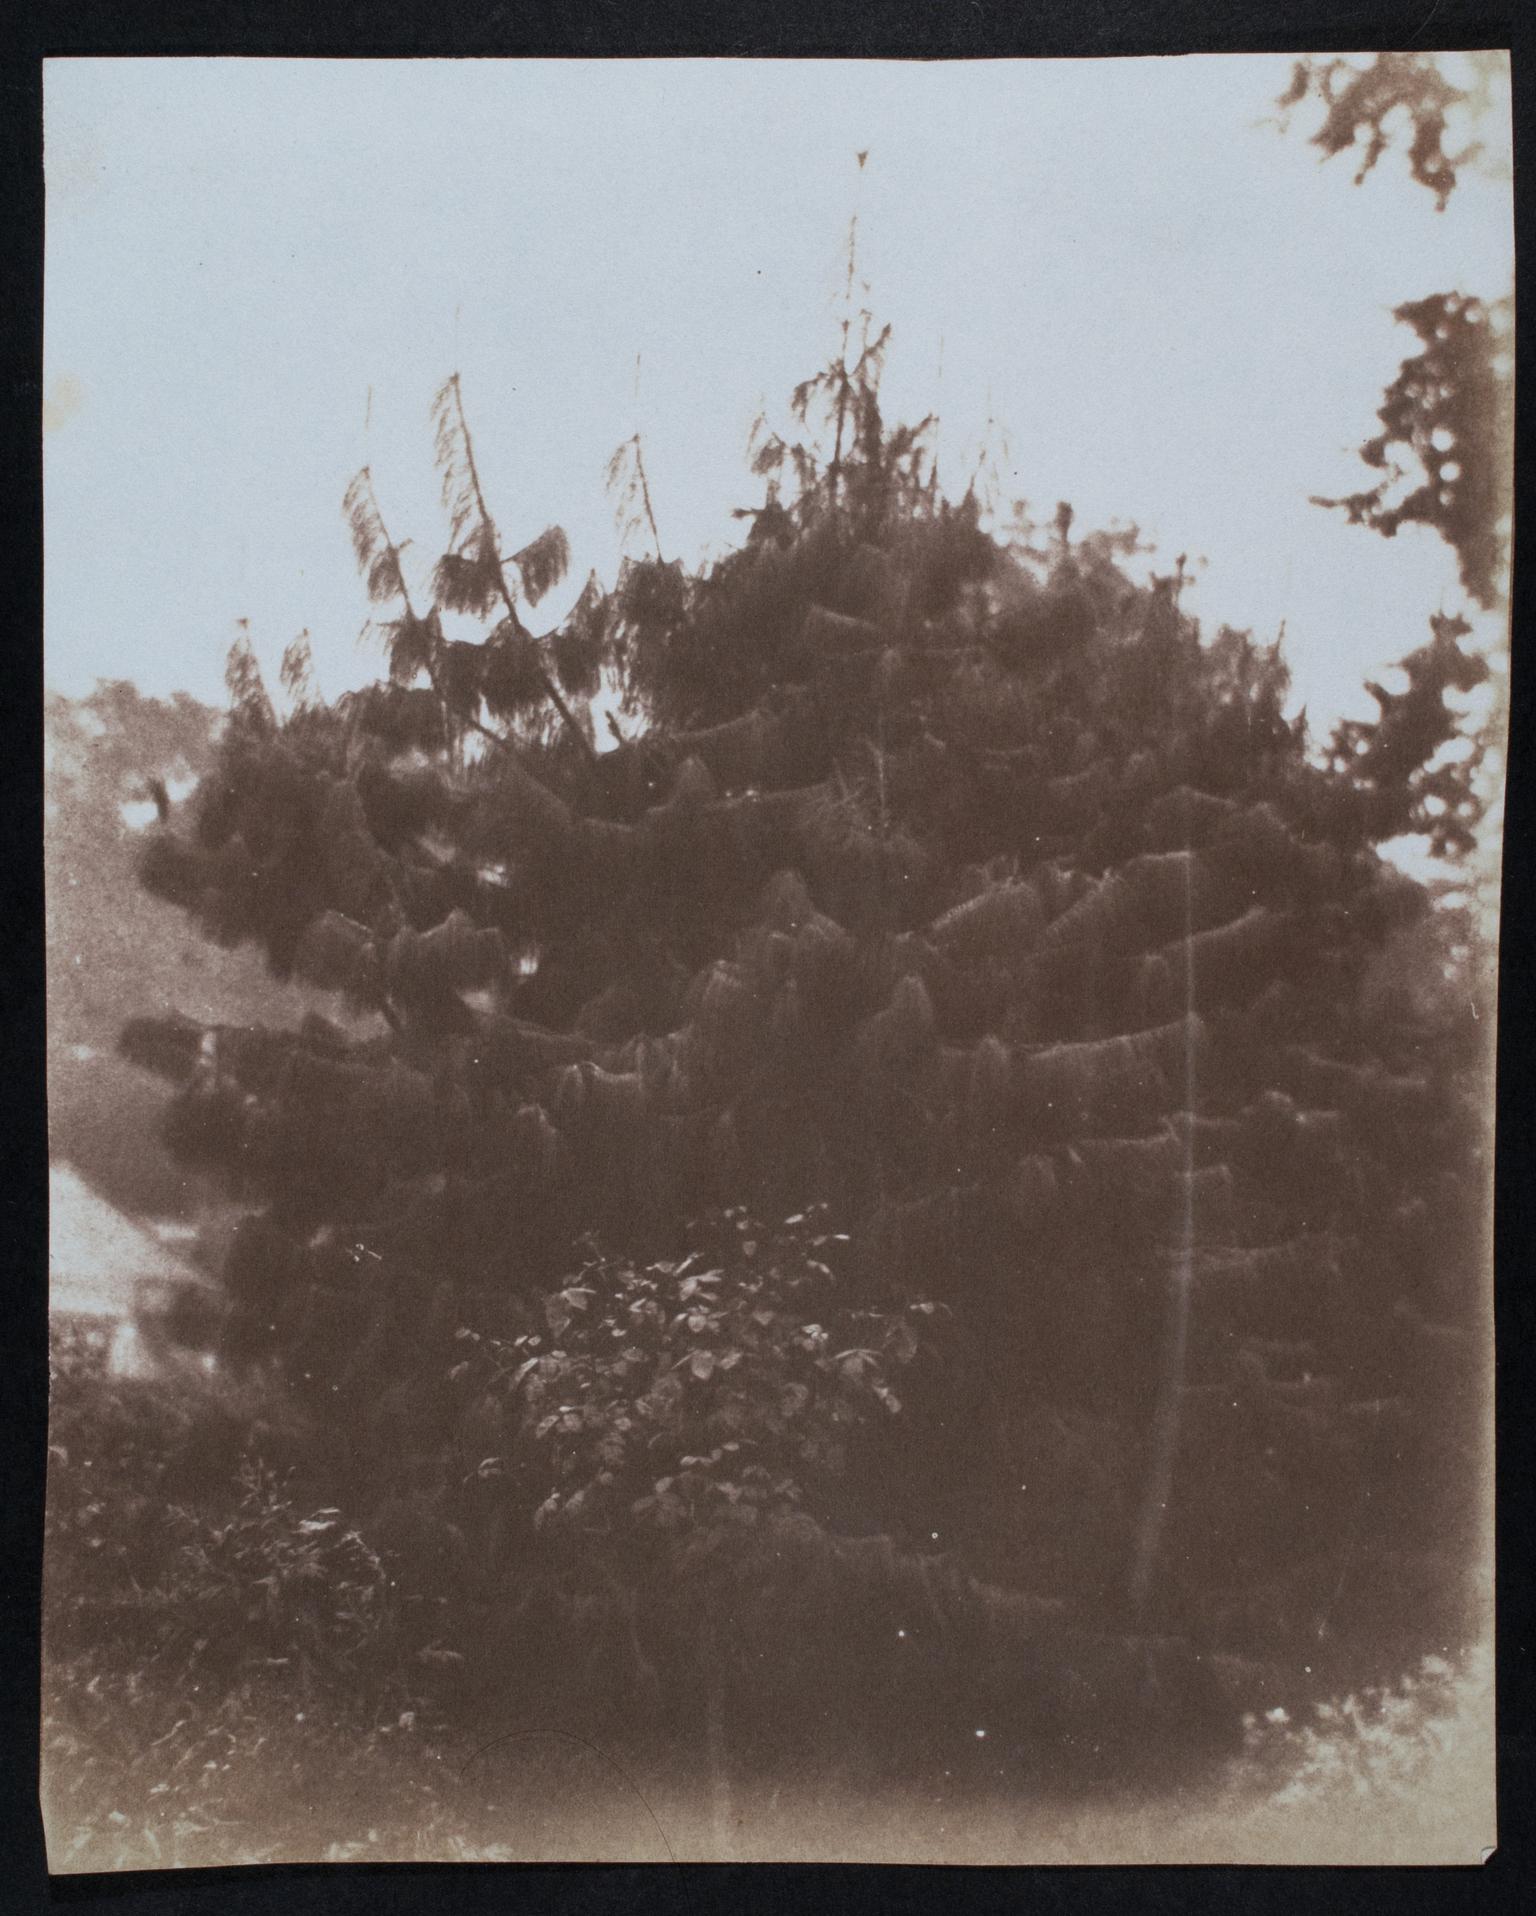 Pine tree, photograph